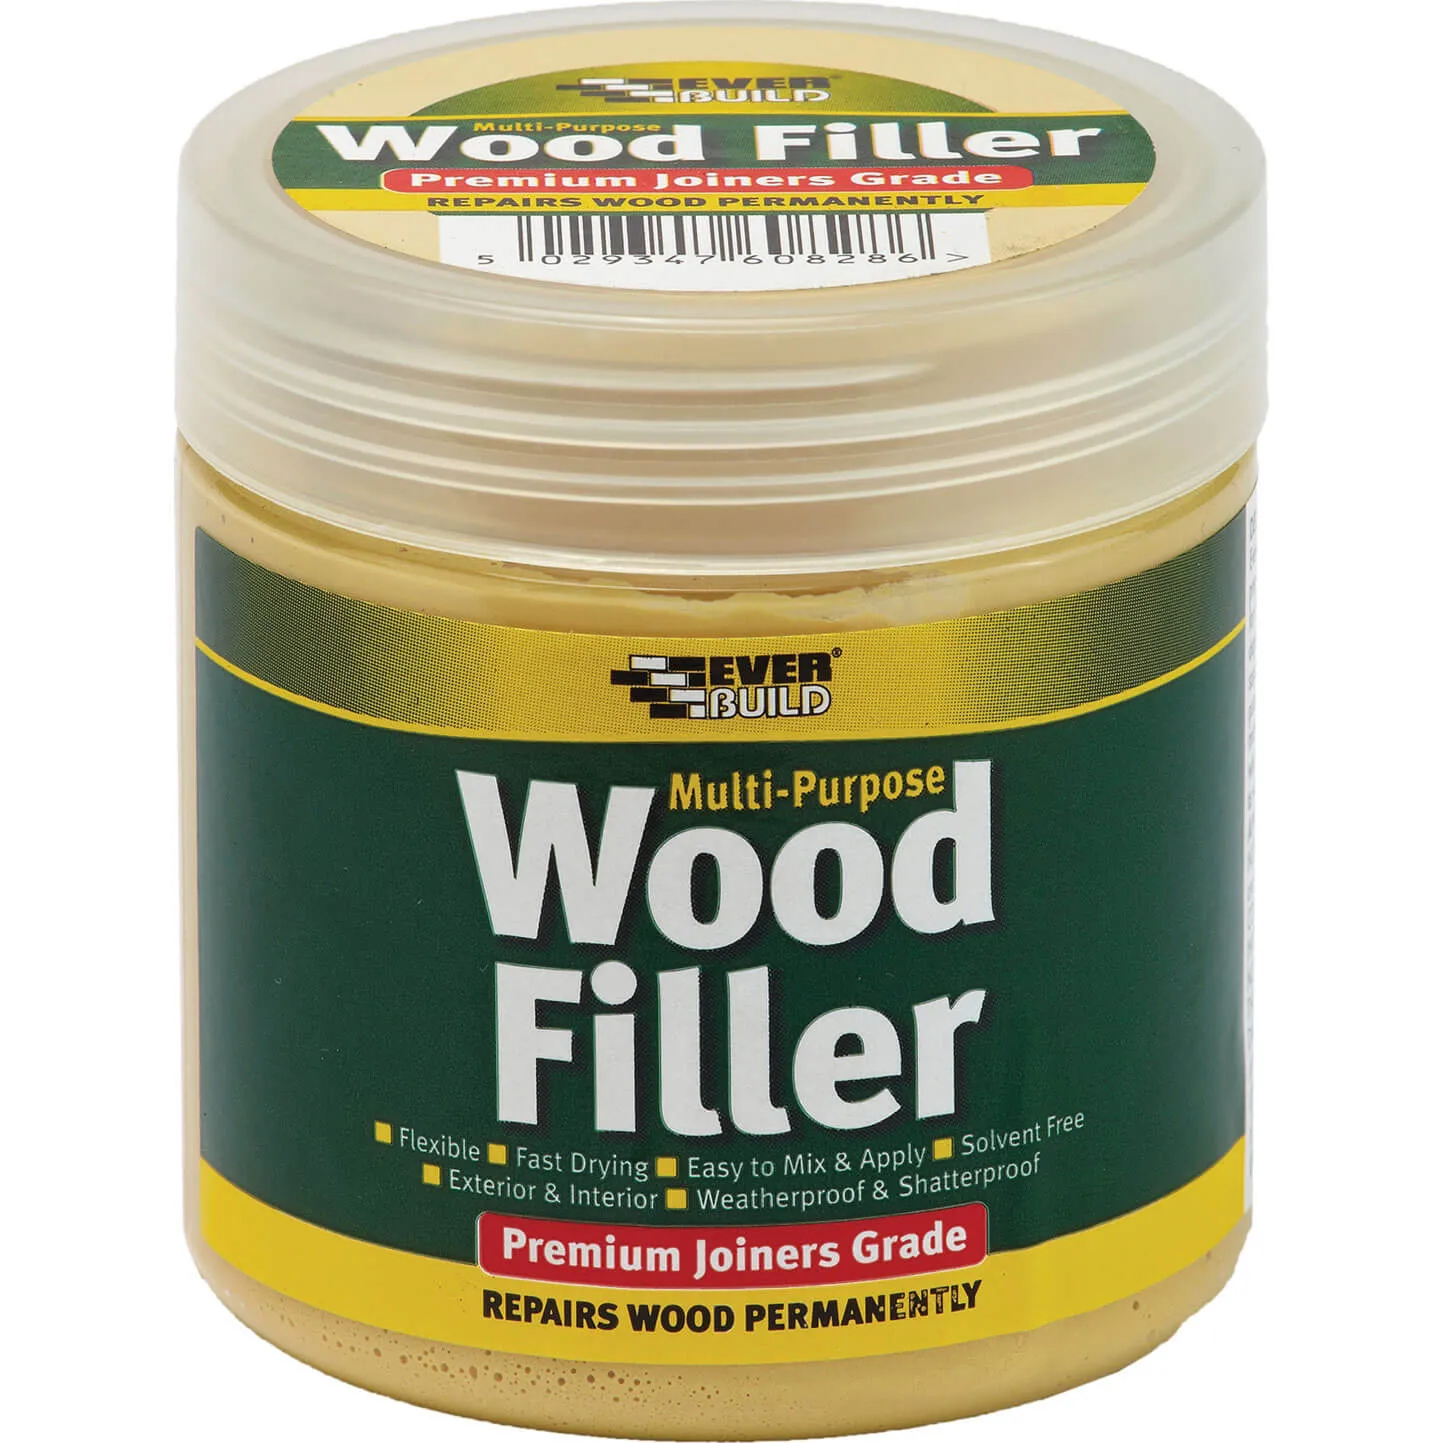 Everbuild Multi Purpose Premium Joiners Grade Wood Filler - White, 250ml